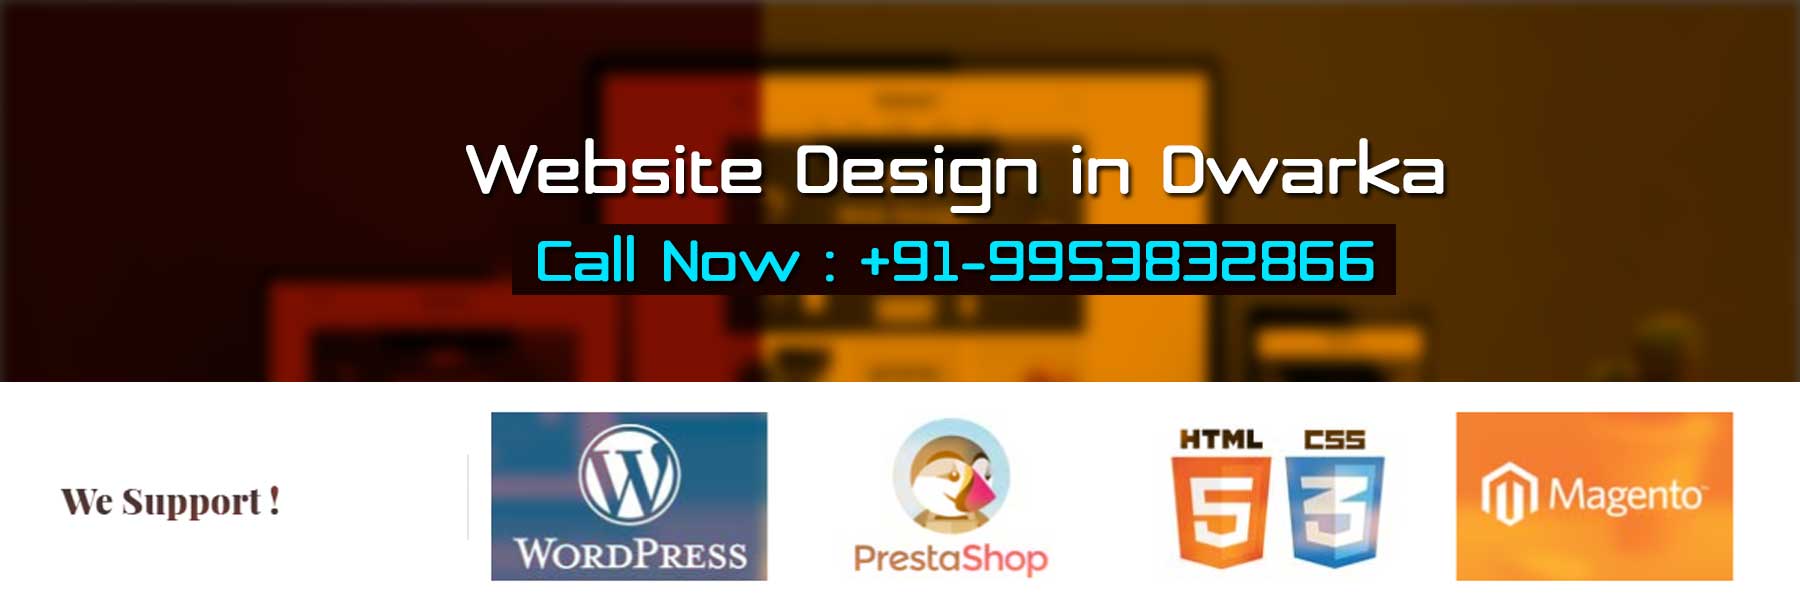 Website Design in Dwarka